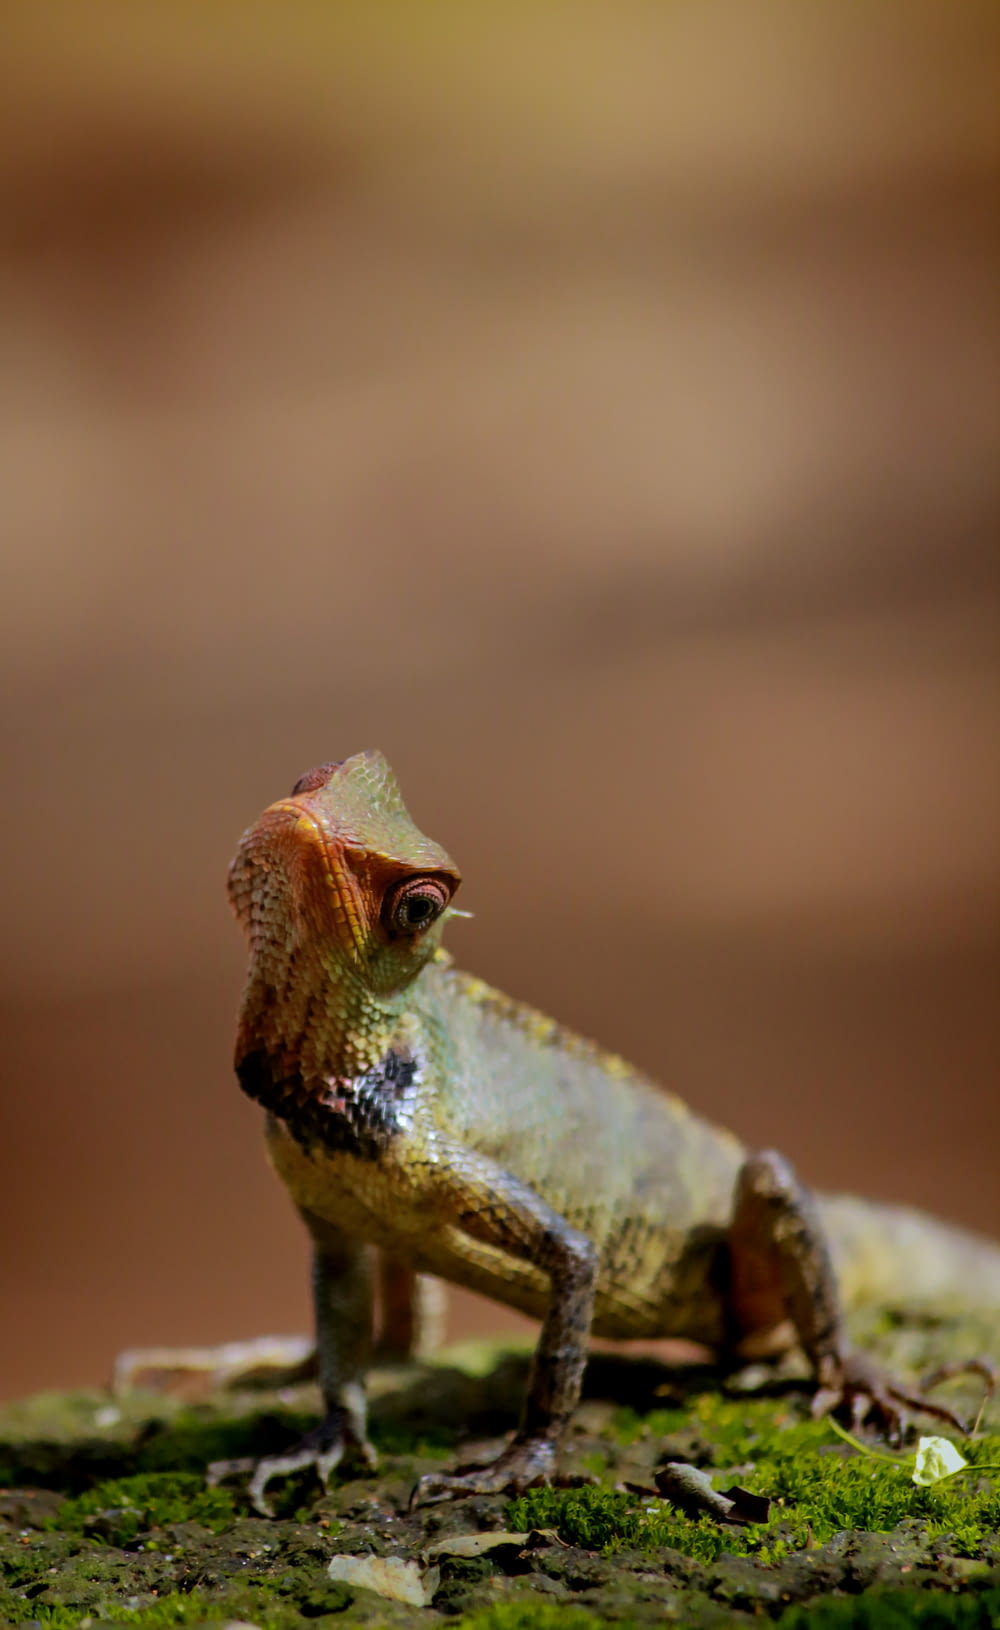 shallow focus photo of reptile